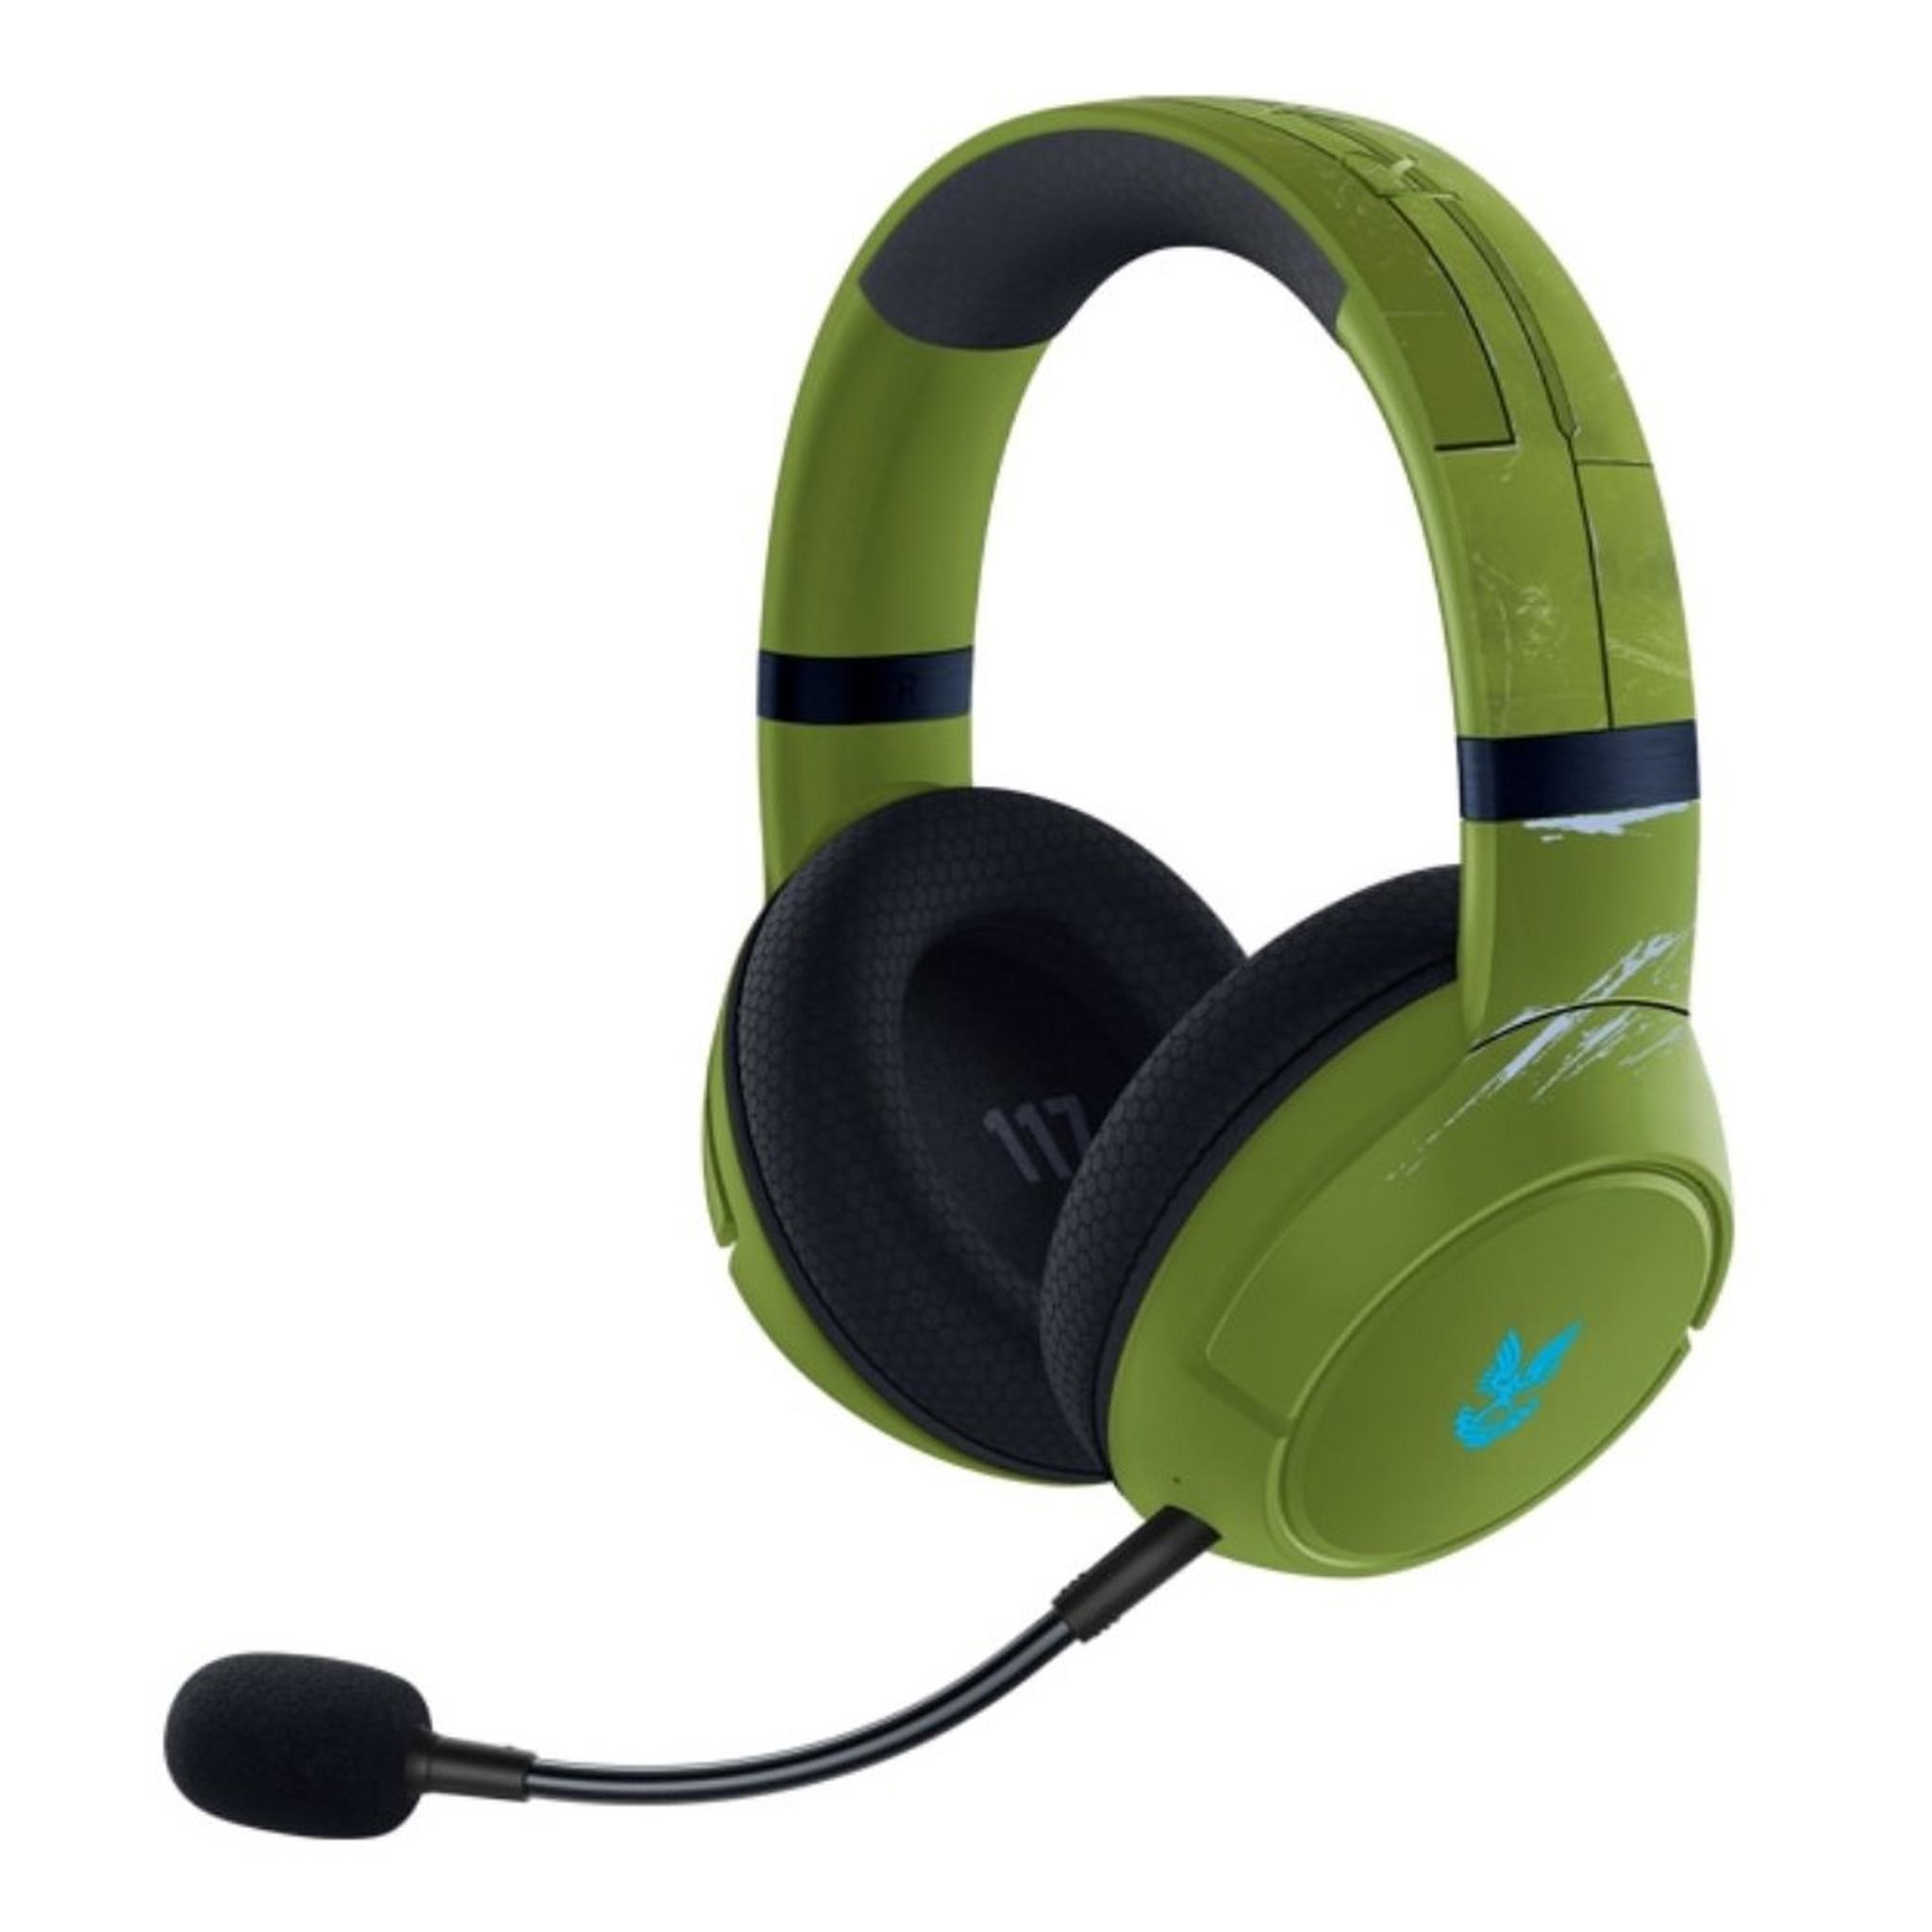 Razer Kaira Pro Xbox Wireless Gaming Headset - Halo Infinite Edition